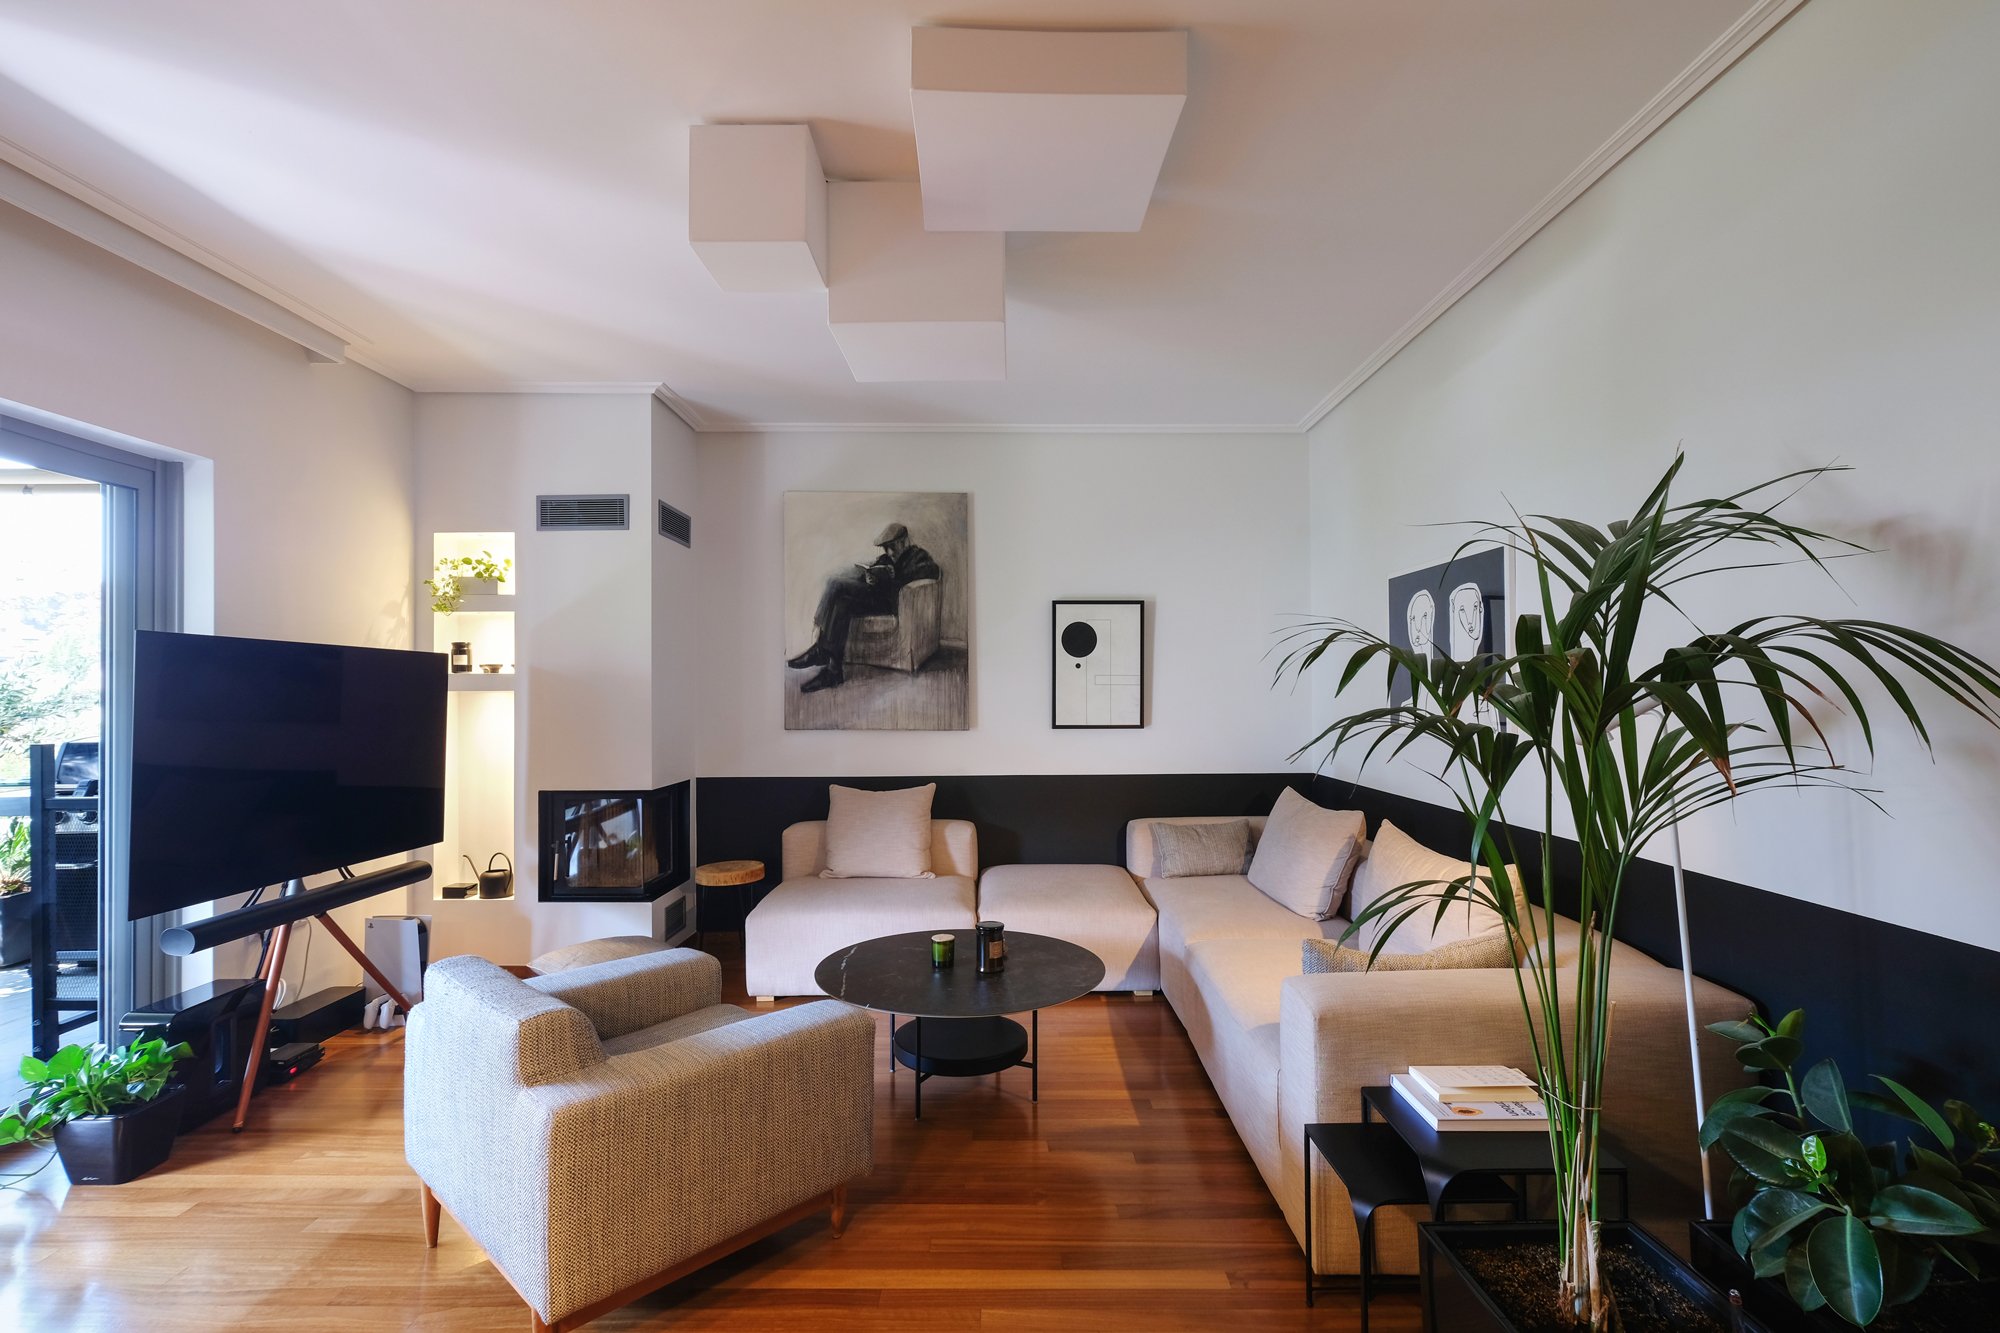  Apartment renovation in Vyronas,  Katerina Ralli Interior Architect  